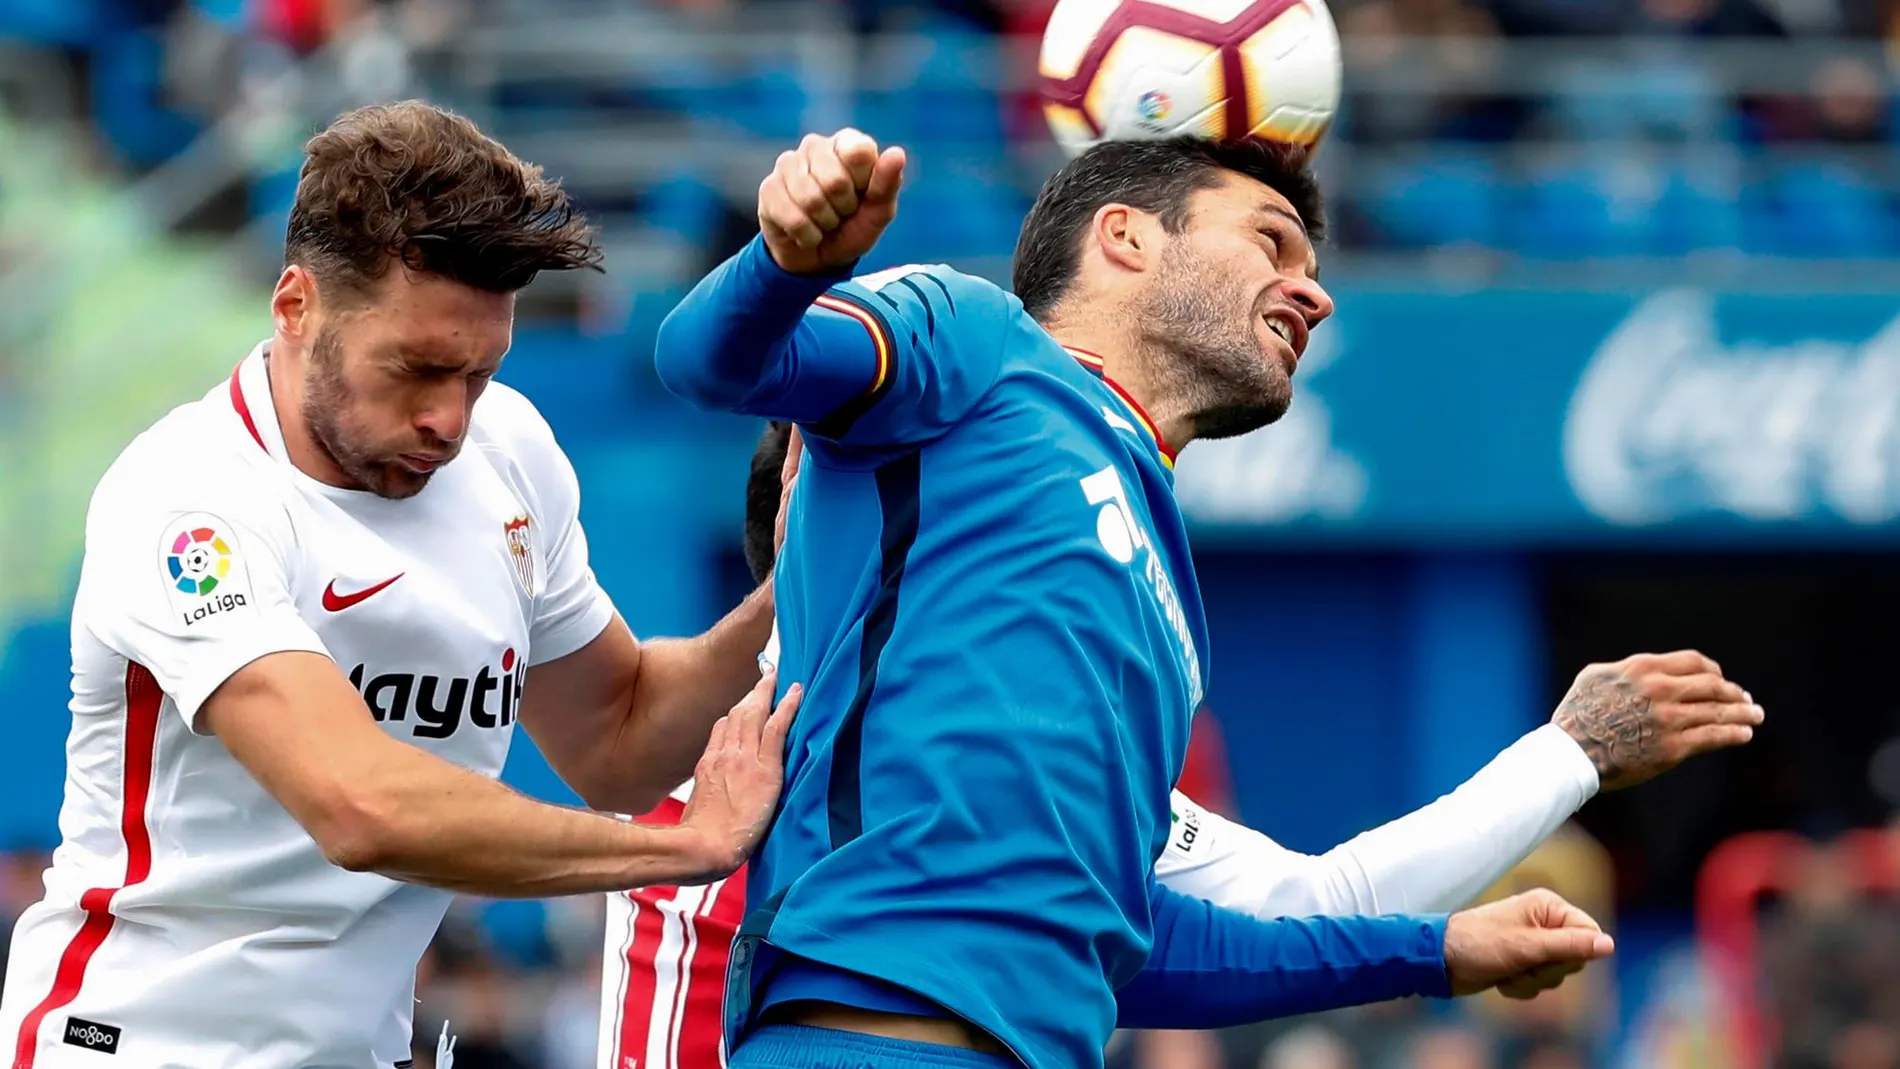 El jugador del Sevilla Sergi Gómez disputa un balón con el jugador del Getafe Jorge Molina